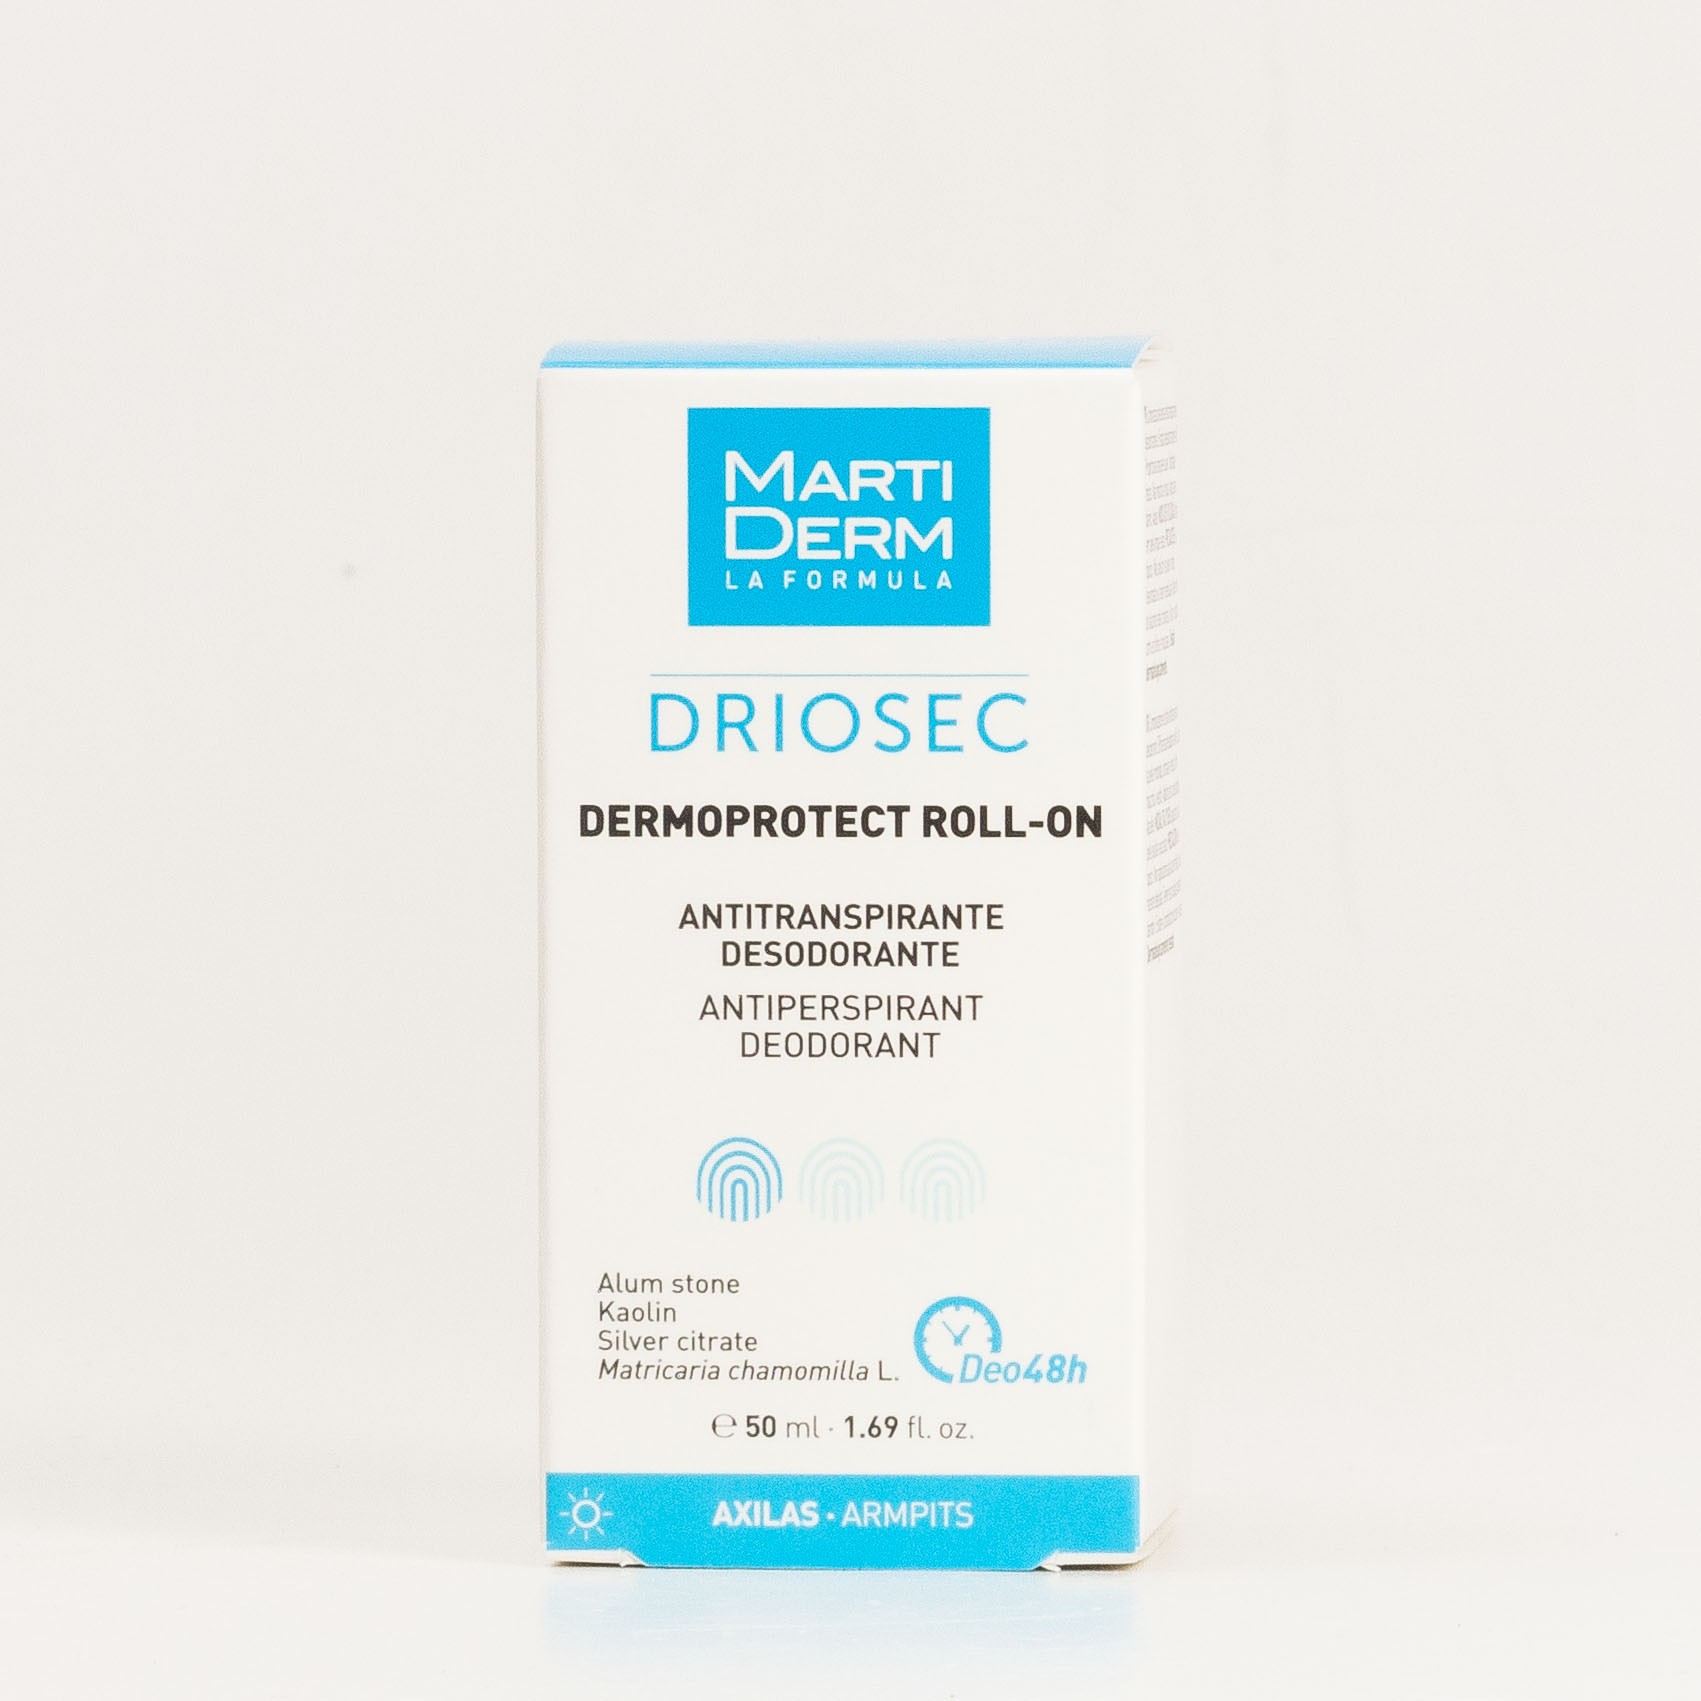 Martiderm Driosec Dermoprotect roll-on, 50 ml